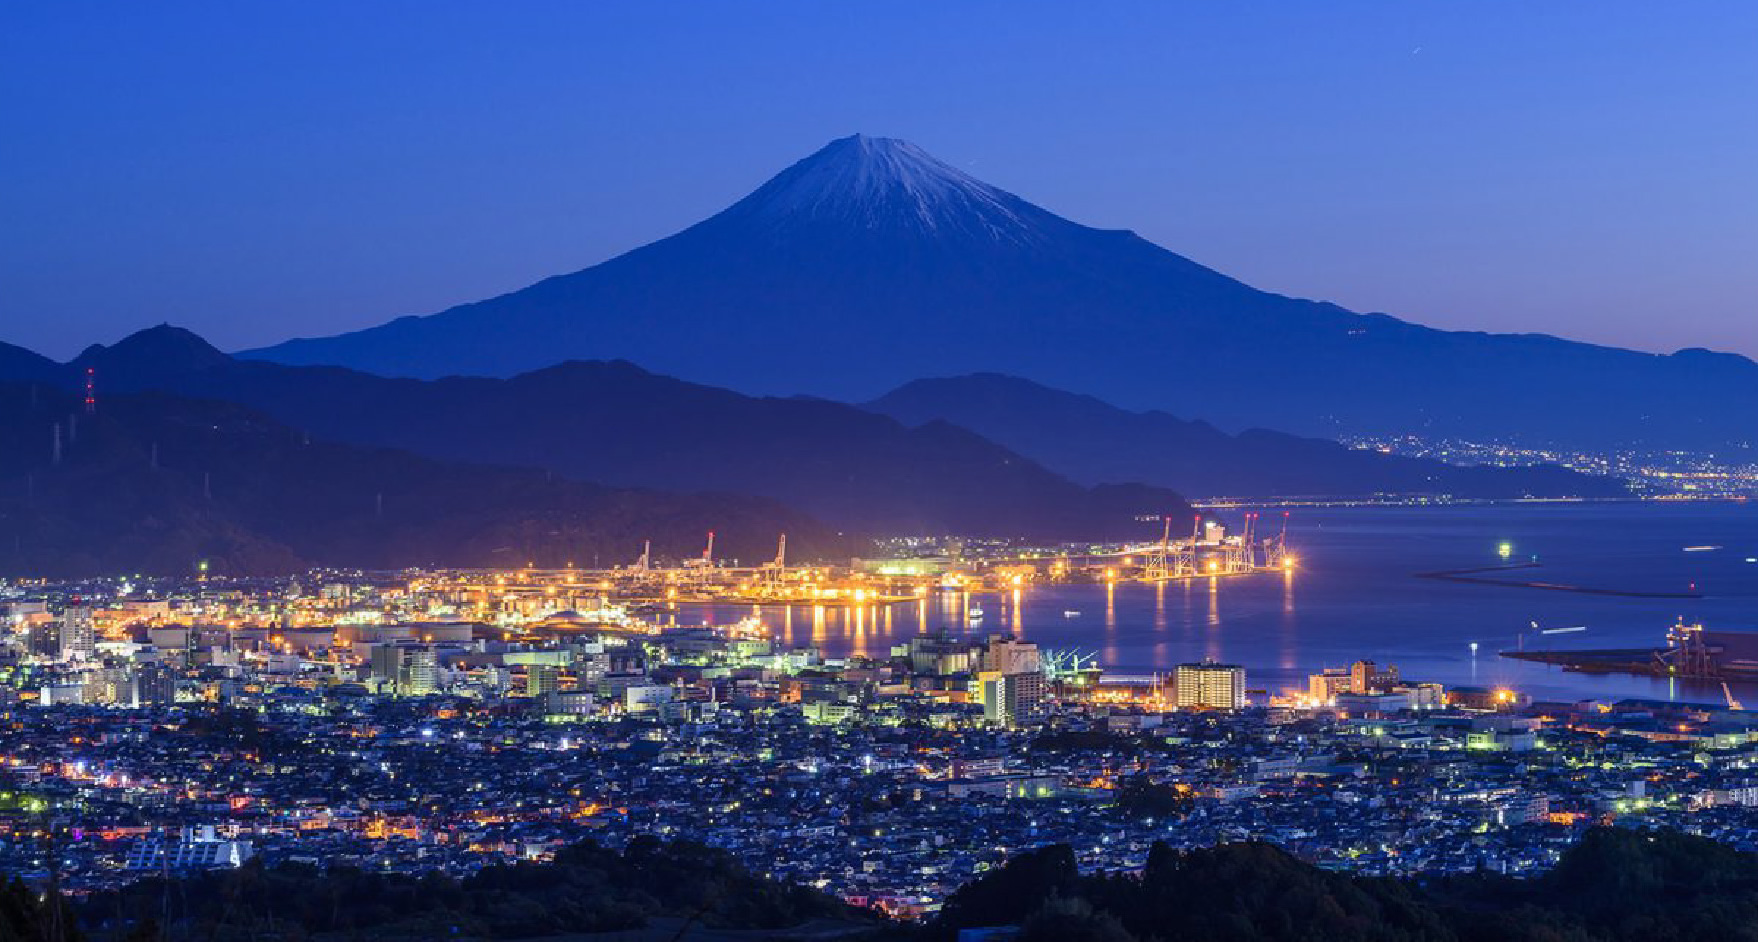 The Three Great Night Views of Fuji